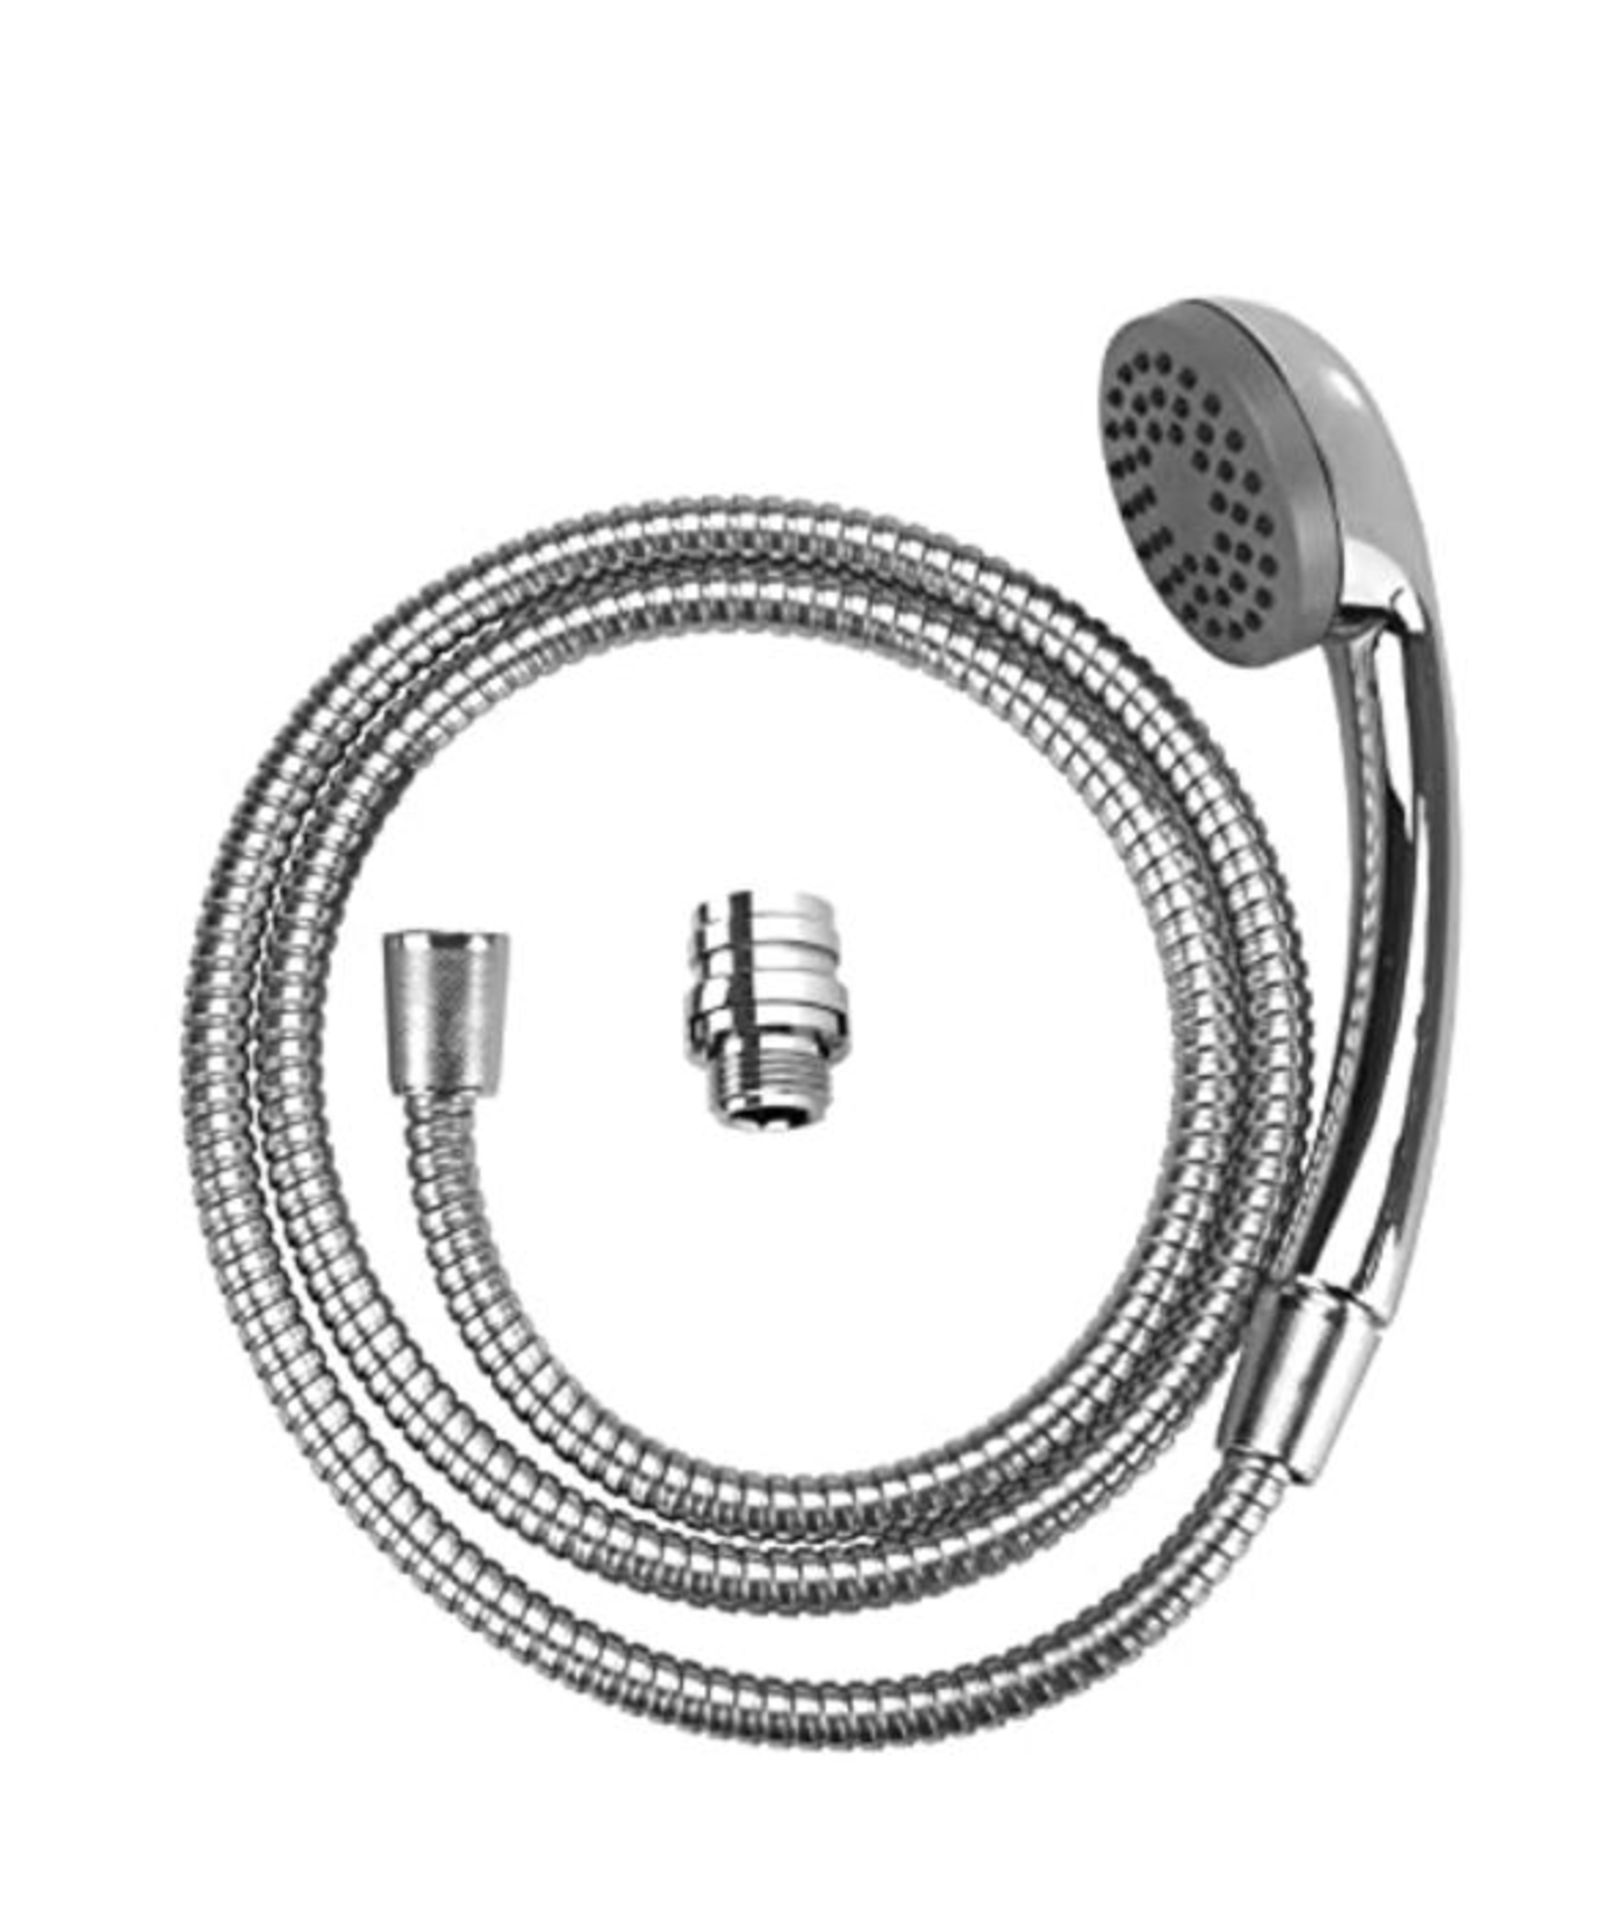 WENKO WK22866 handbasin-Mobile Hand Stainless Steel Shower Hose, Silver Shiny, 6.5 x 1